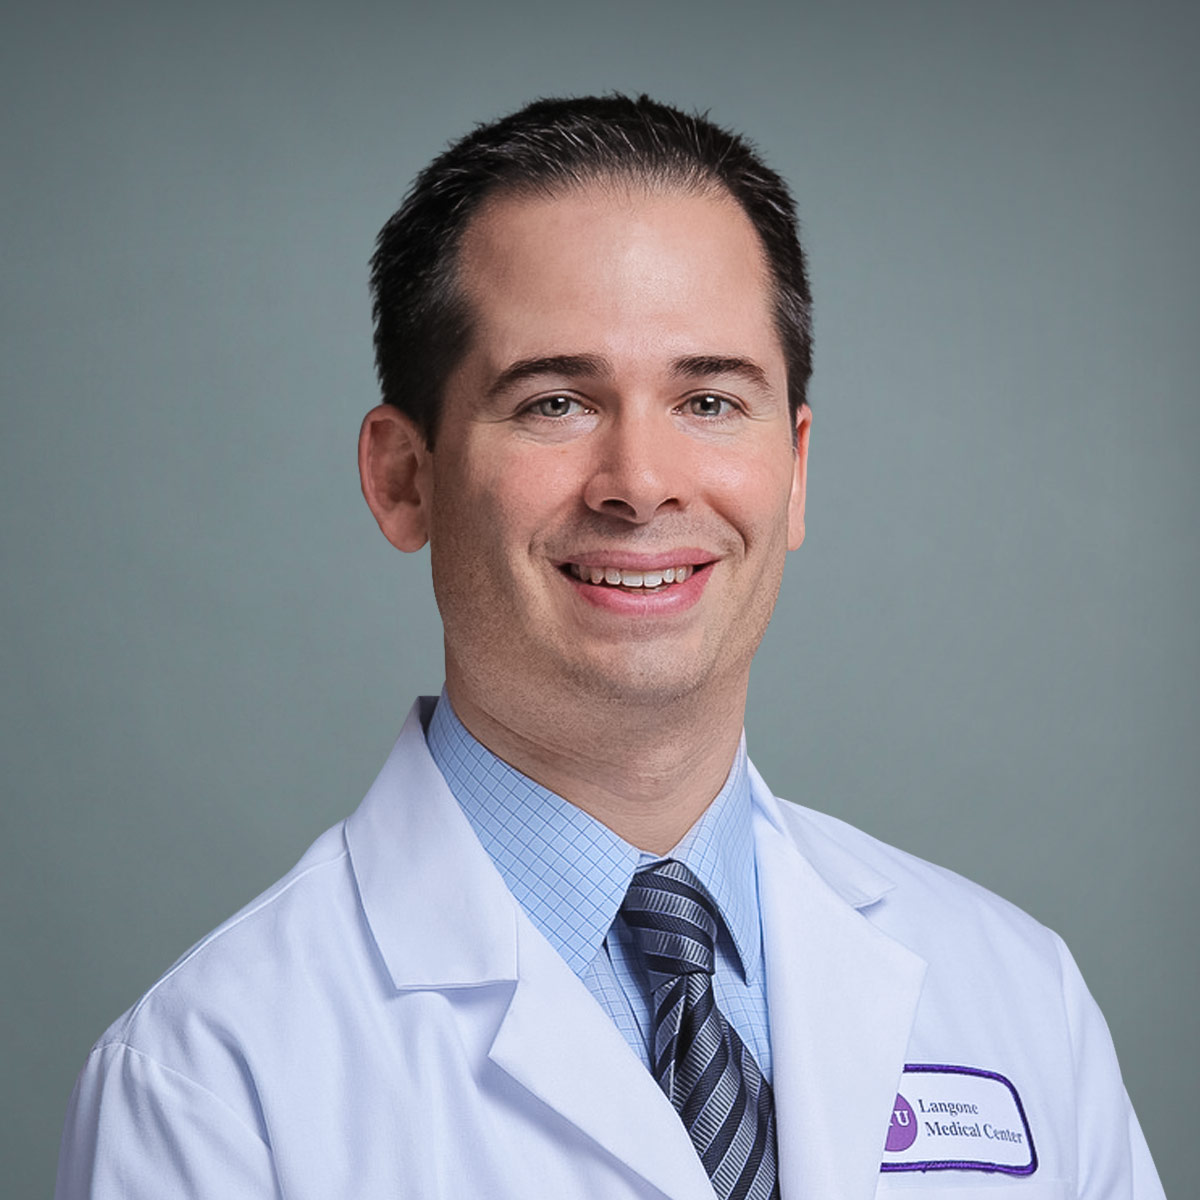 Robert M. Donnino,MD. Cardiology, Echocardiography, Cardiac Imaging